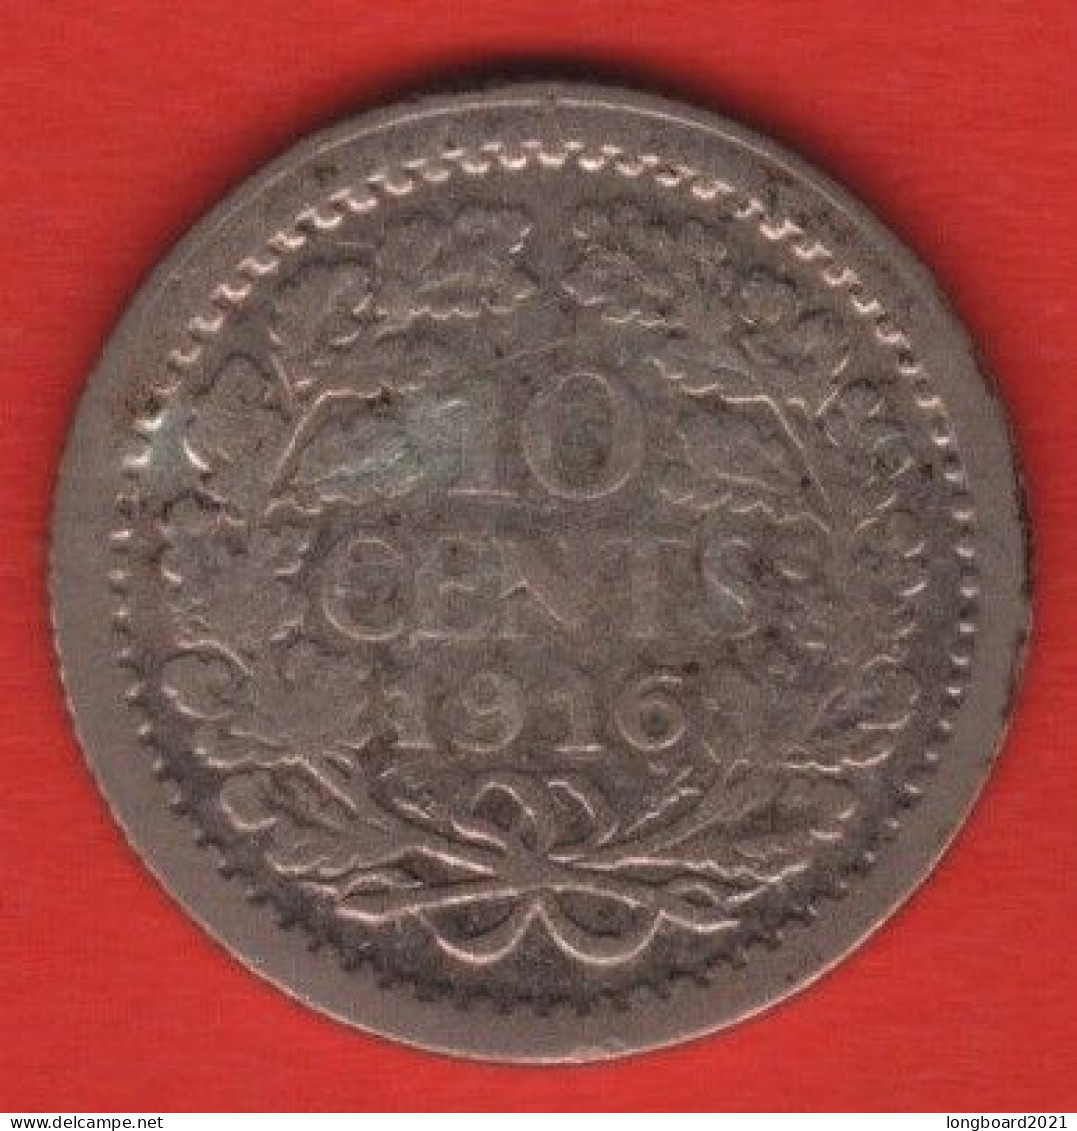 NETHERLANDS - 10 CENT 1916 - 10 Cent